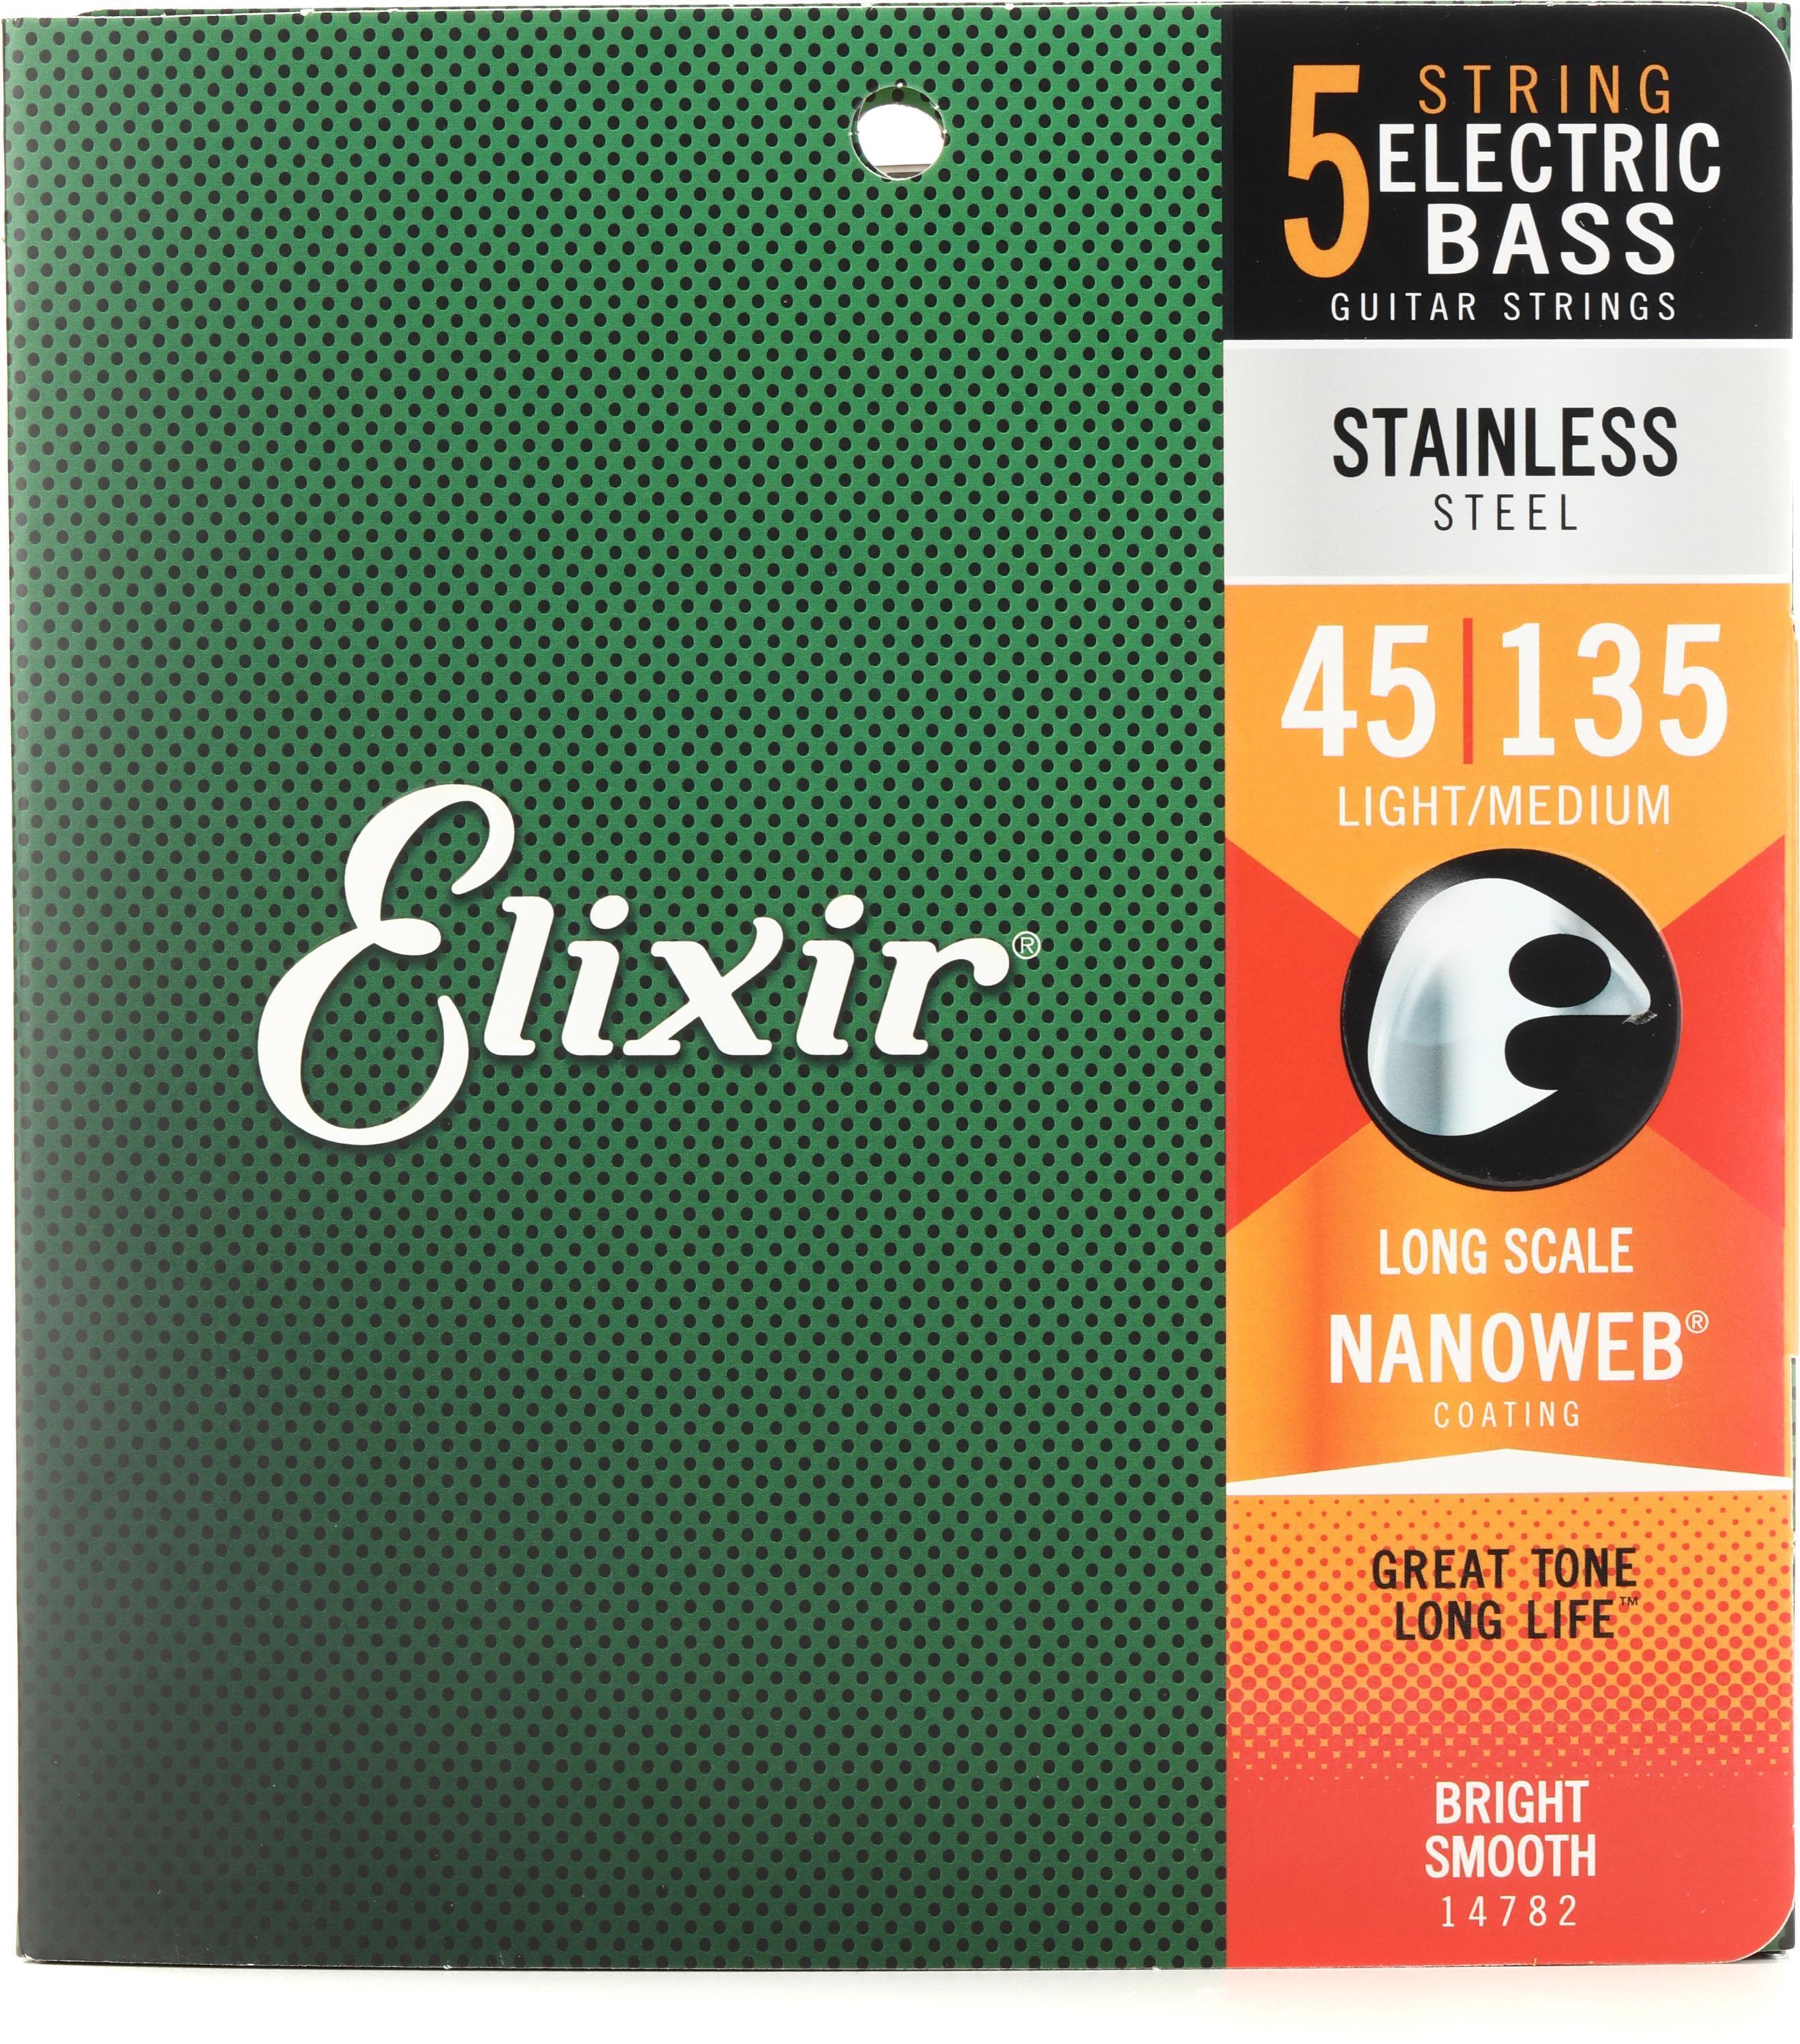 Elixir Strings 14782 Nanoweb Electric Bass Guitar Strings - .045-.135  Light/Medium Long Scale